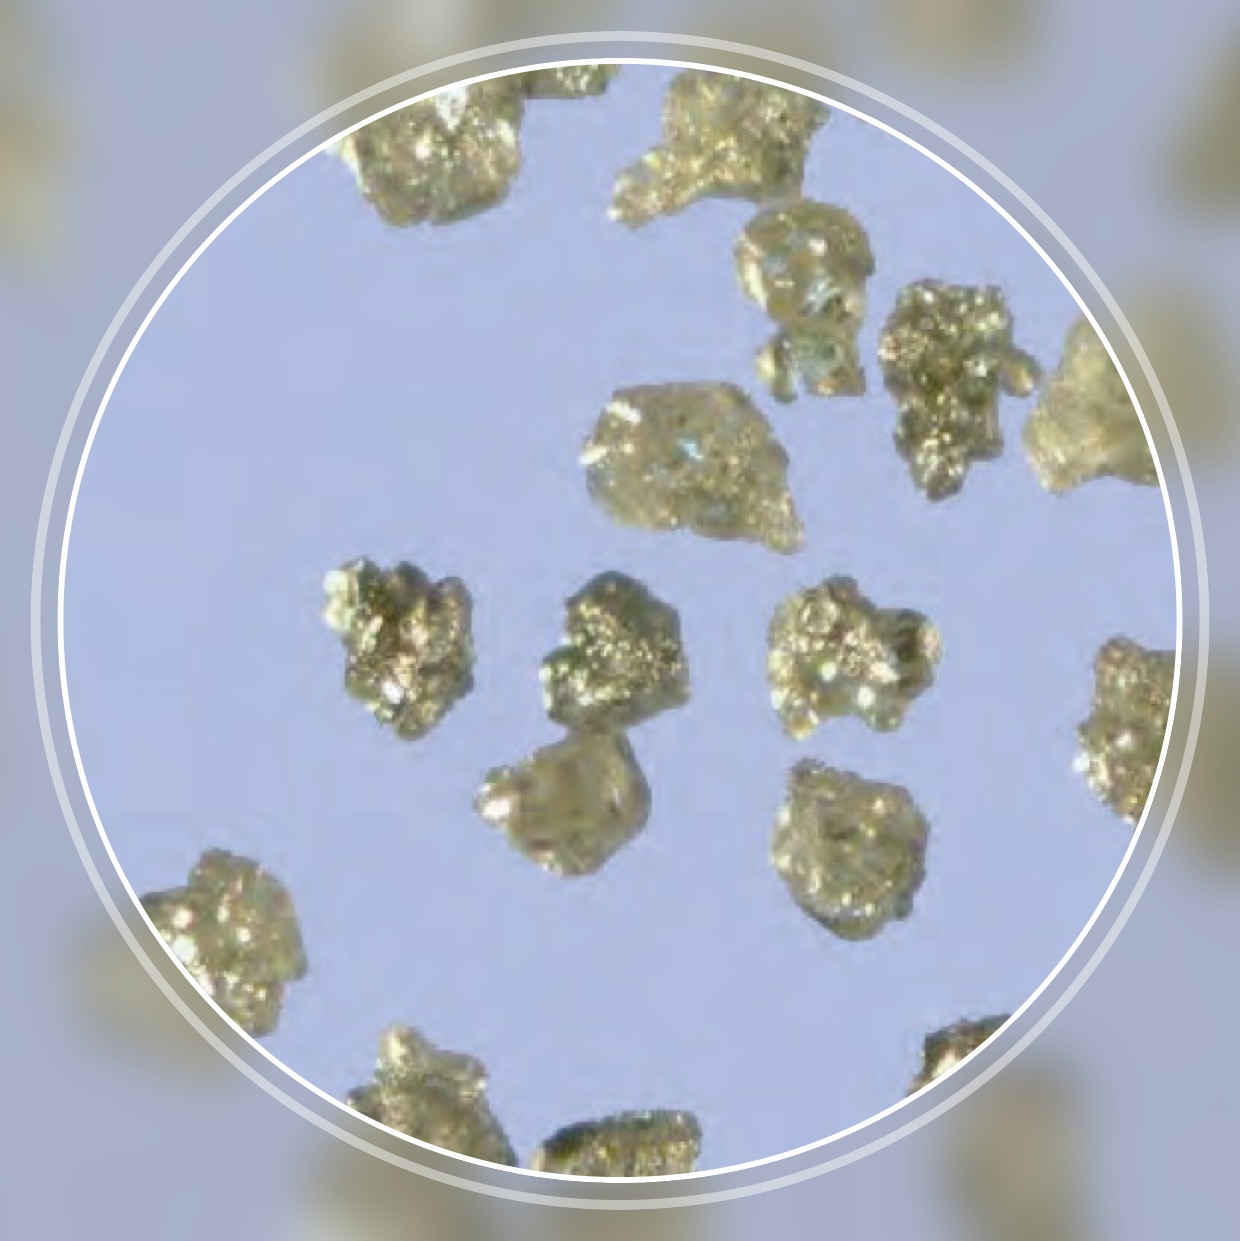 SND-R15 Standard Grade Blocky Resin Bond Diamond With Medium Friability